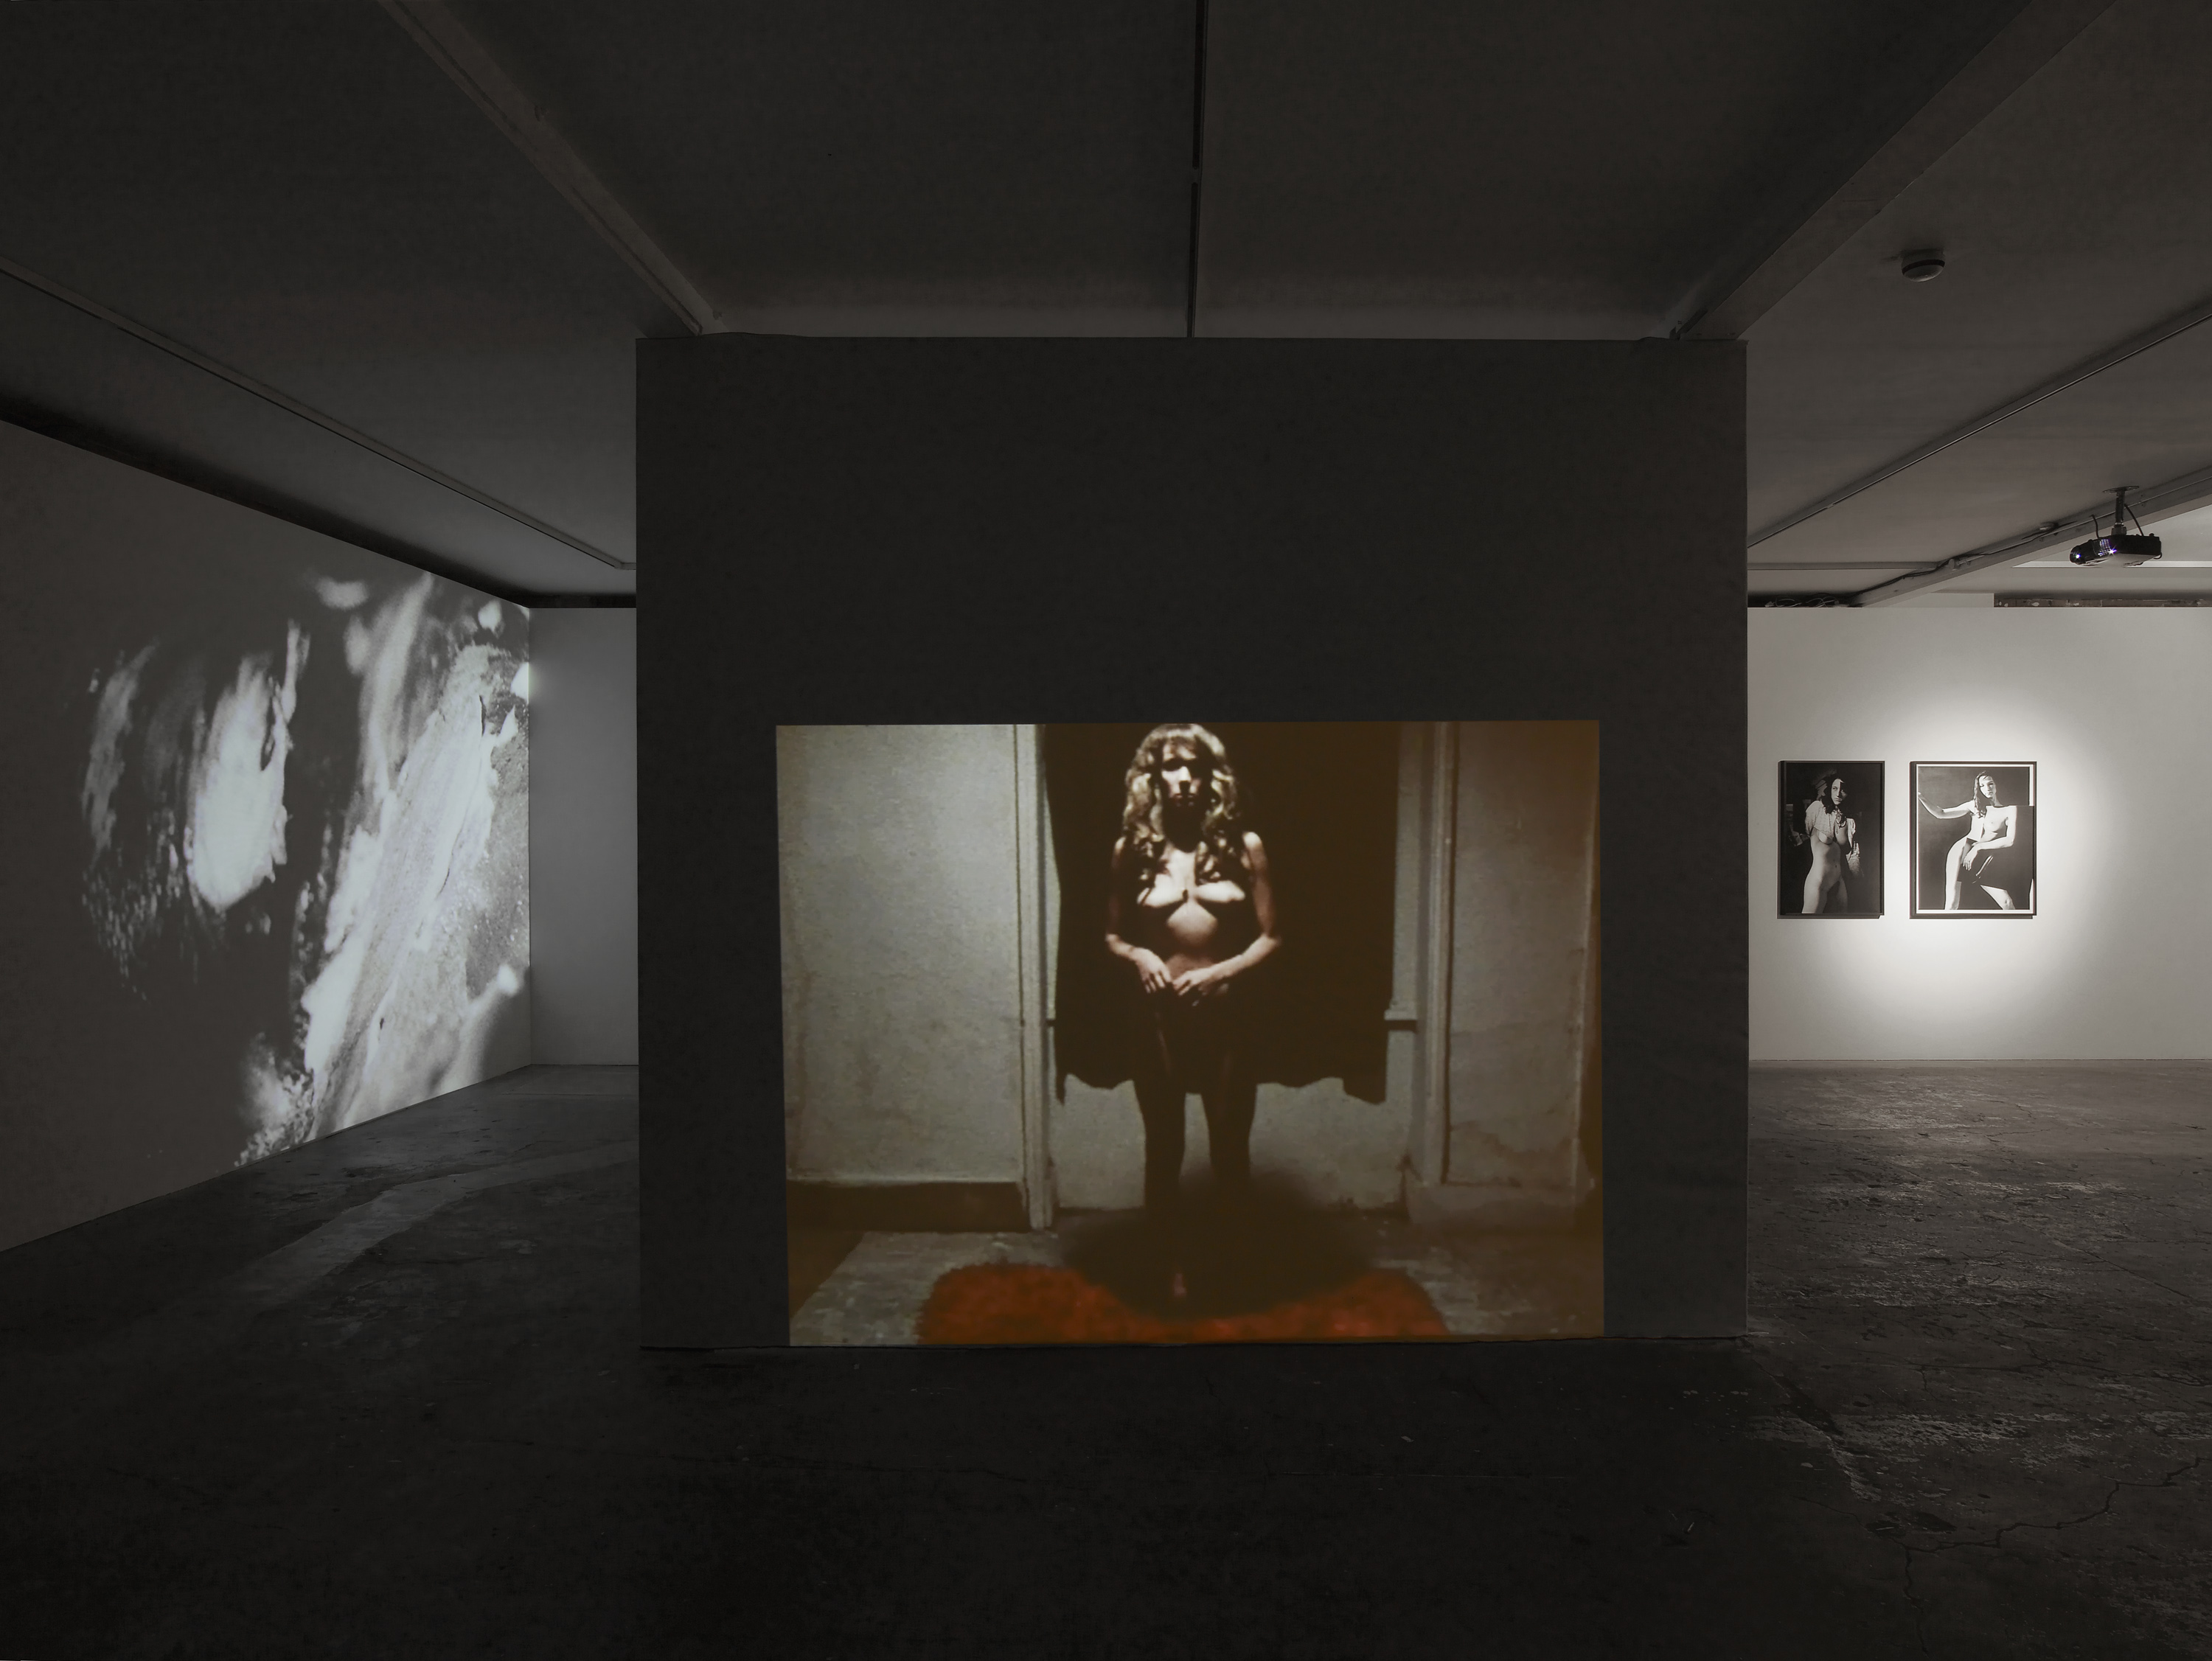 Stephen Dwoskin, 2015, Vilma Gold, London, installation view. Stephen Dwoskin